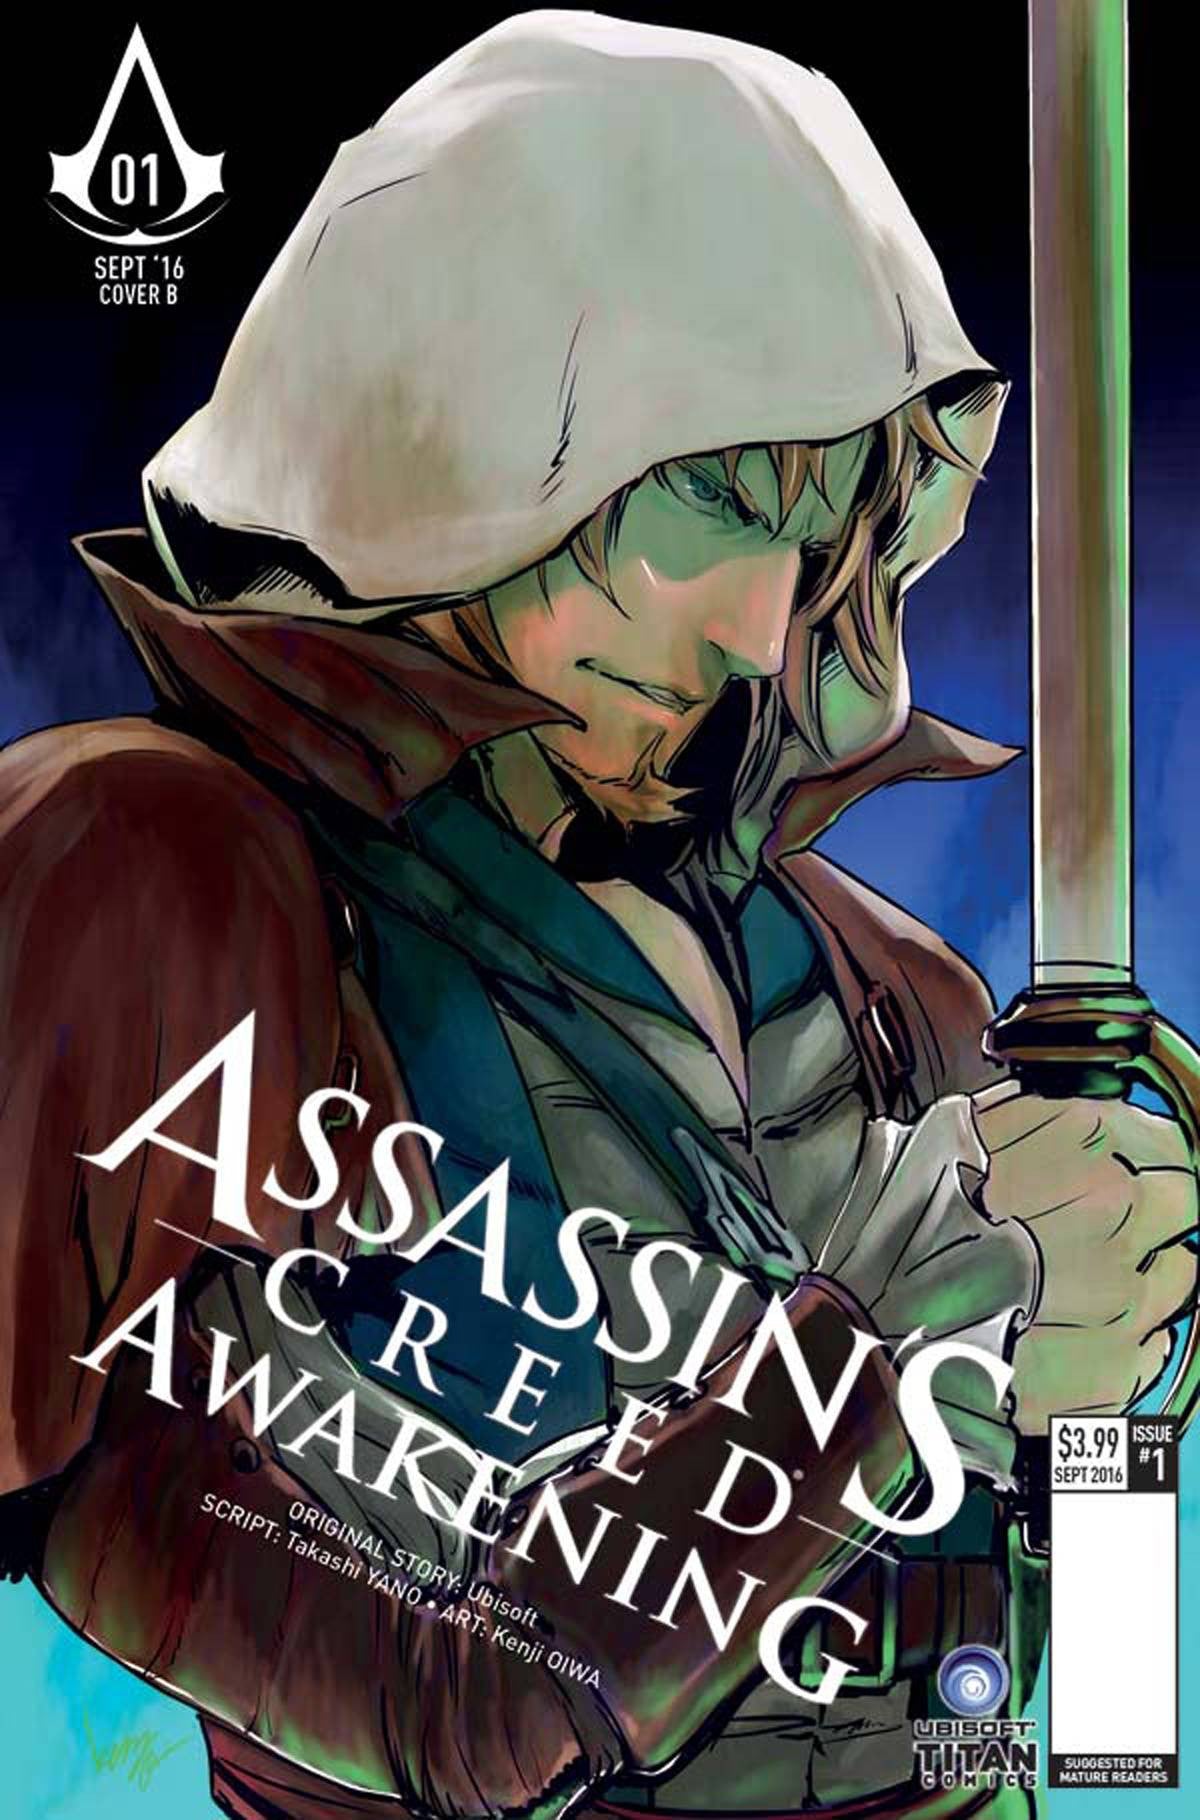 ASSASSINS CREED AWAKENING #1 (OF 6) CVR B KENJI (MR) COVER